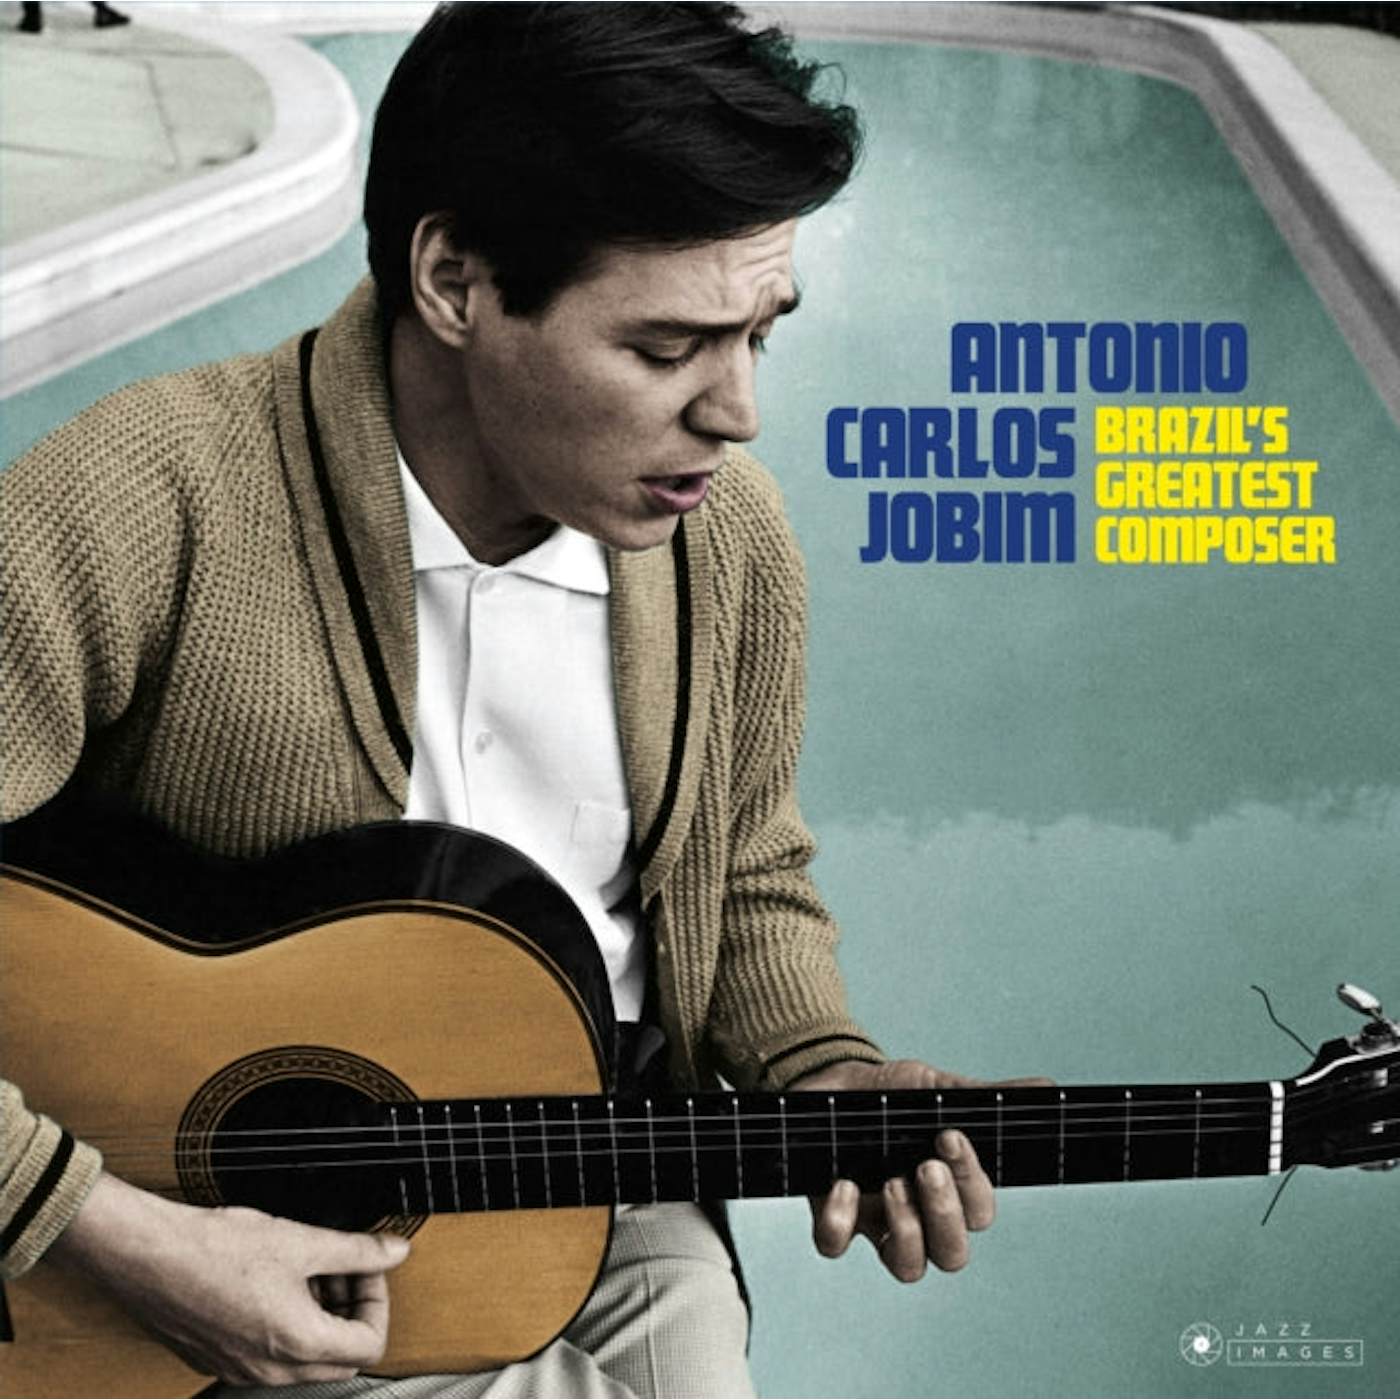 Antônio Carlos Jobim LP Vinyl Record - Brazil's Greatest Composer